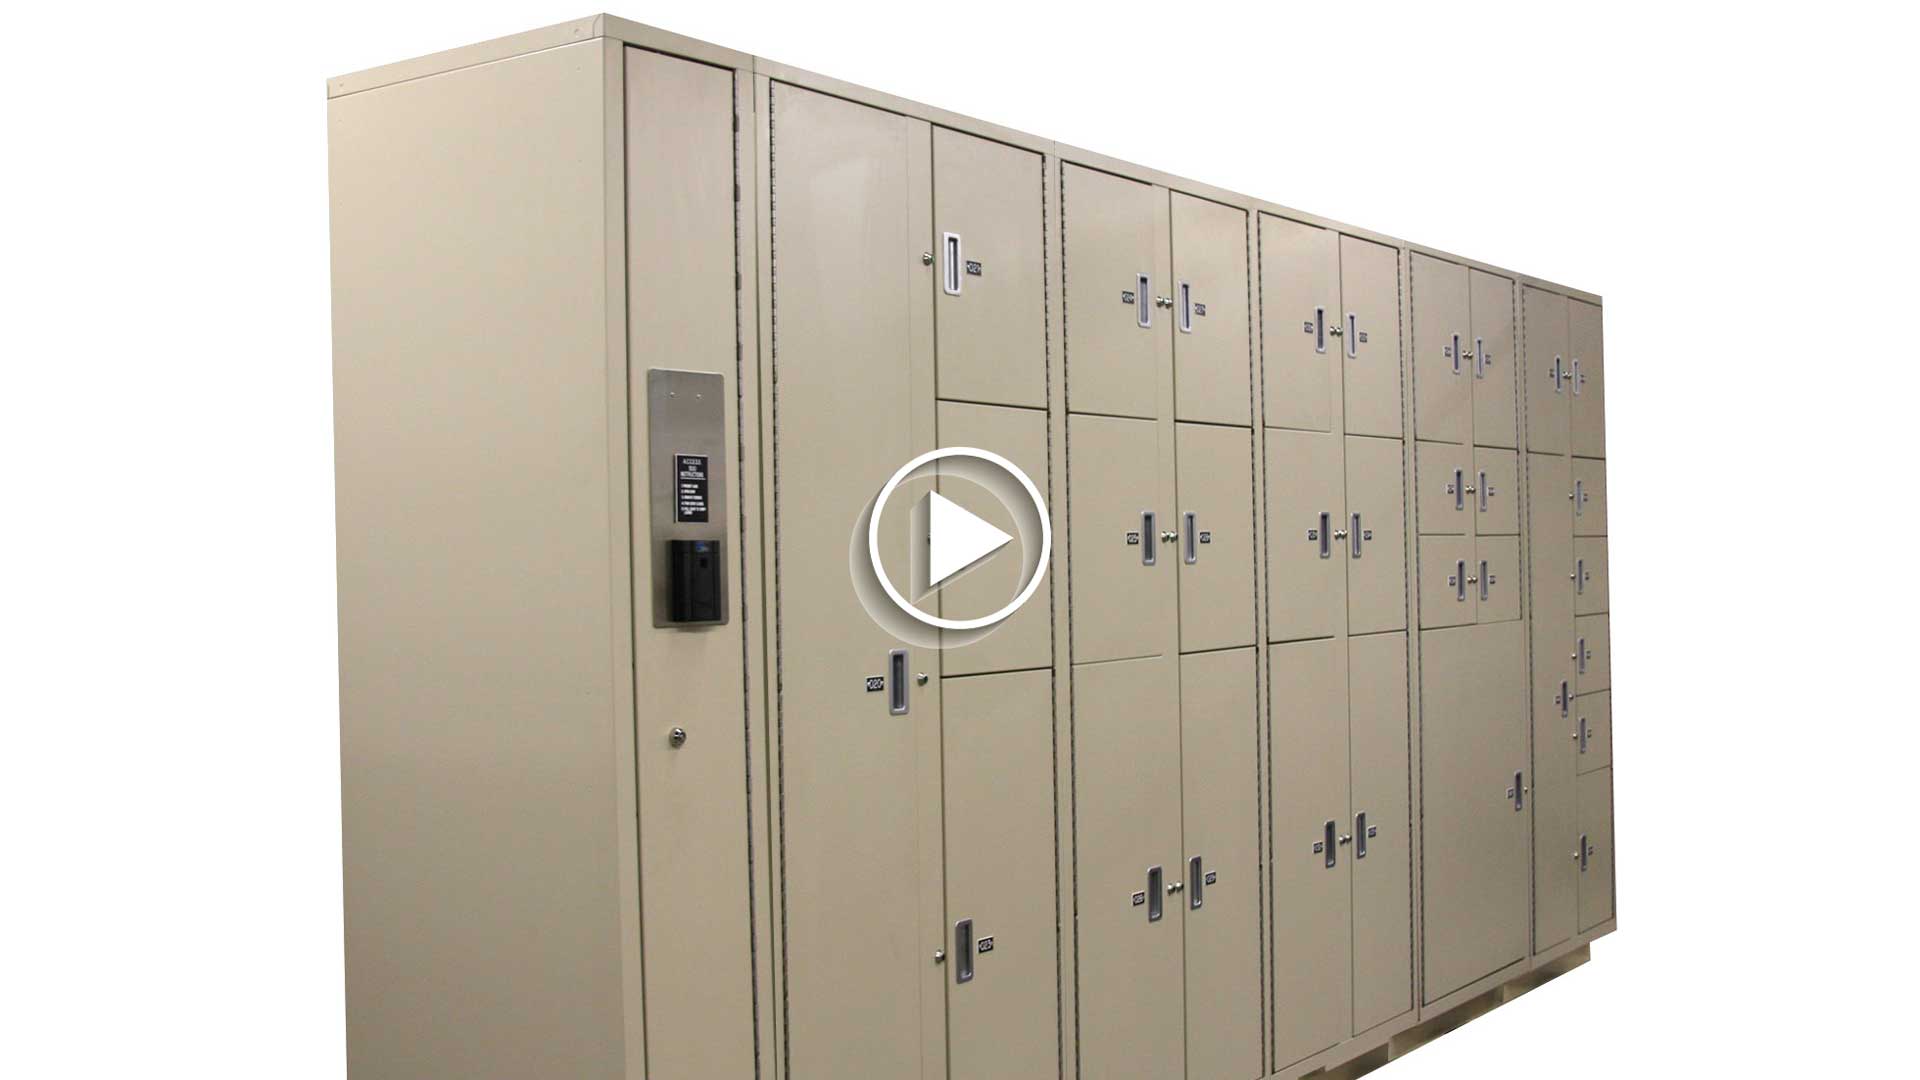 Computerized evidence lockers